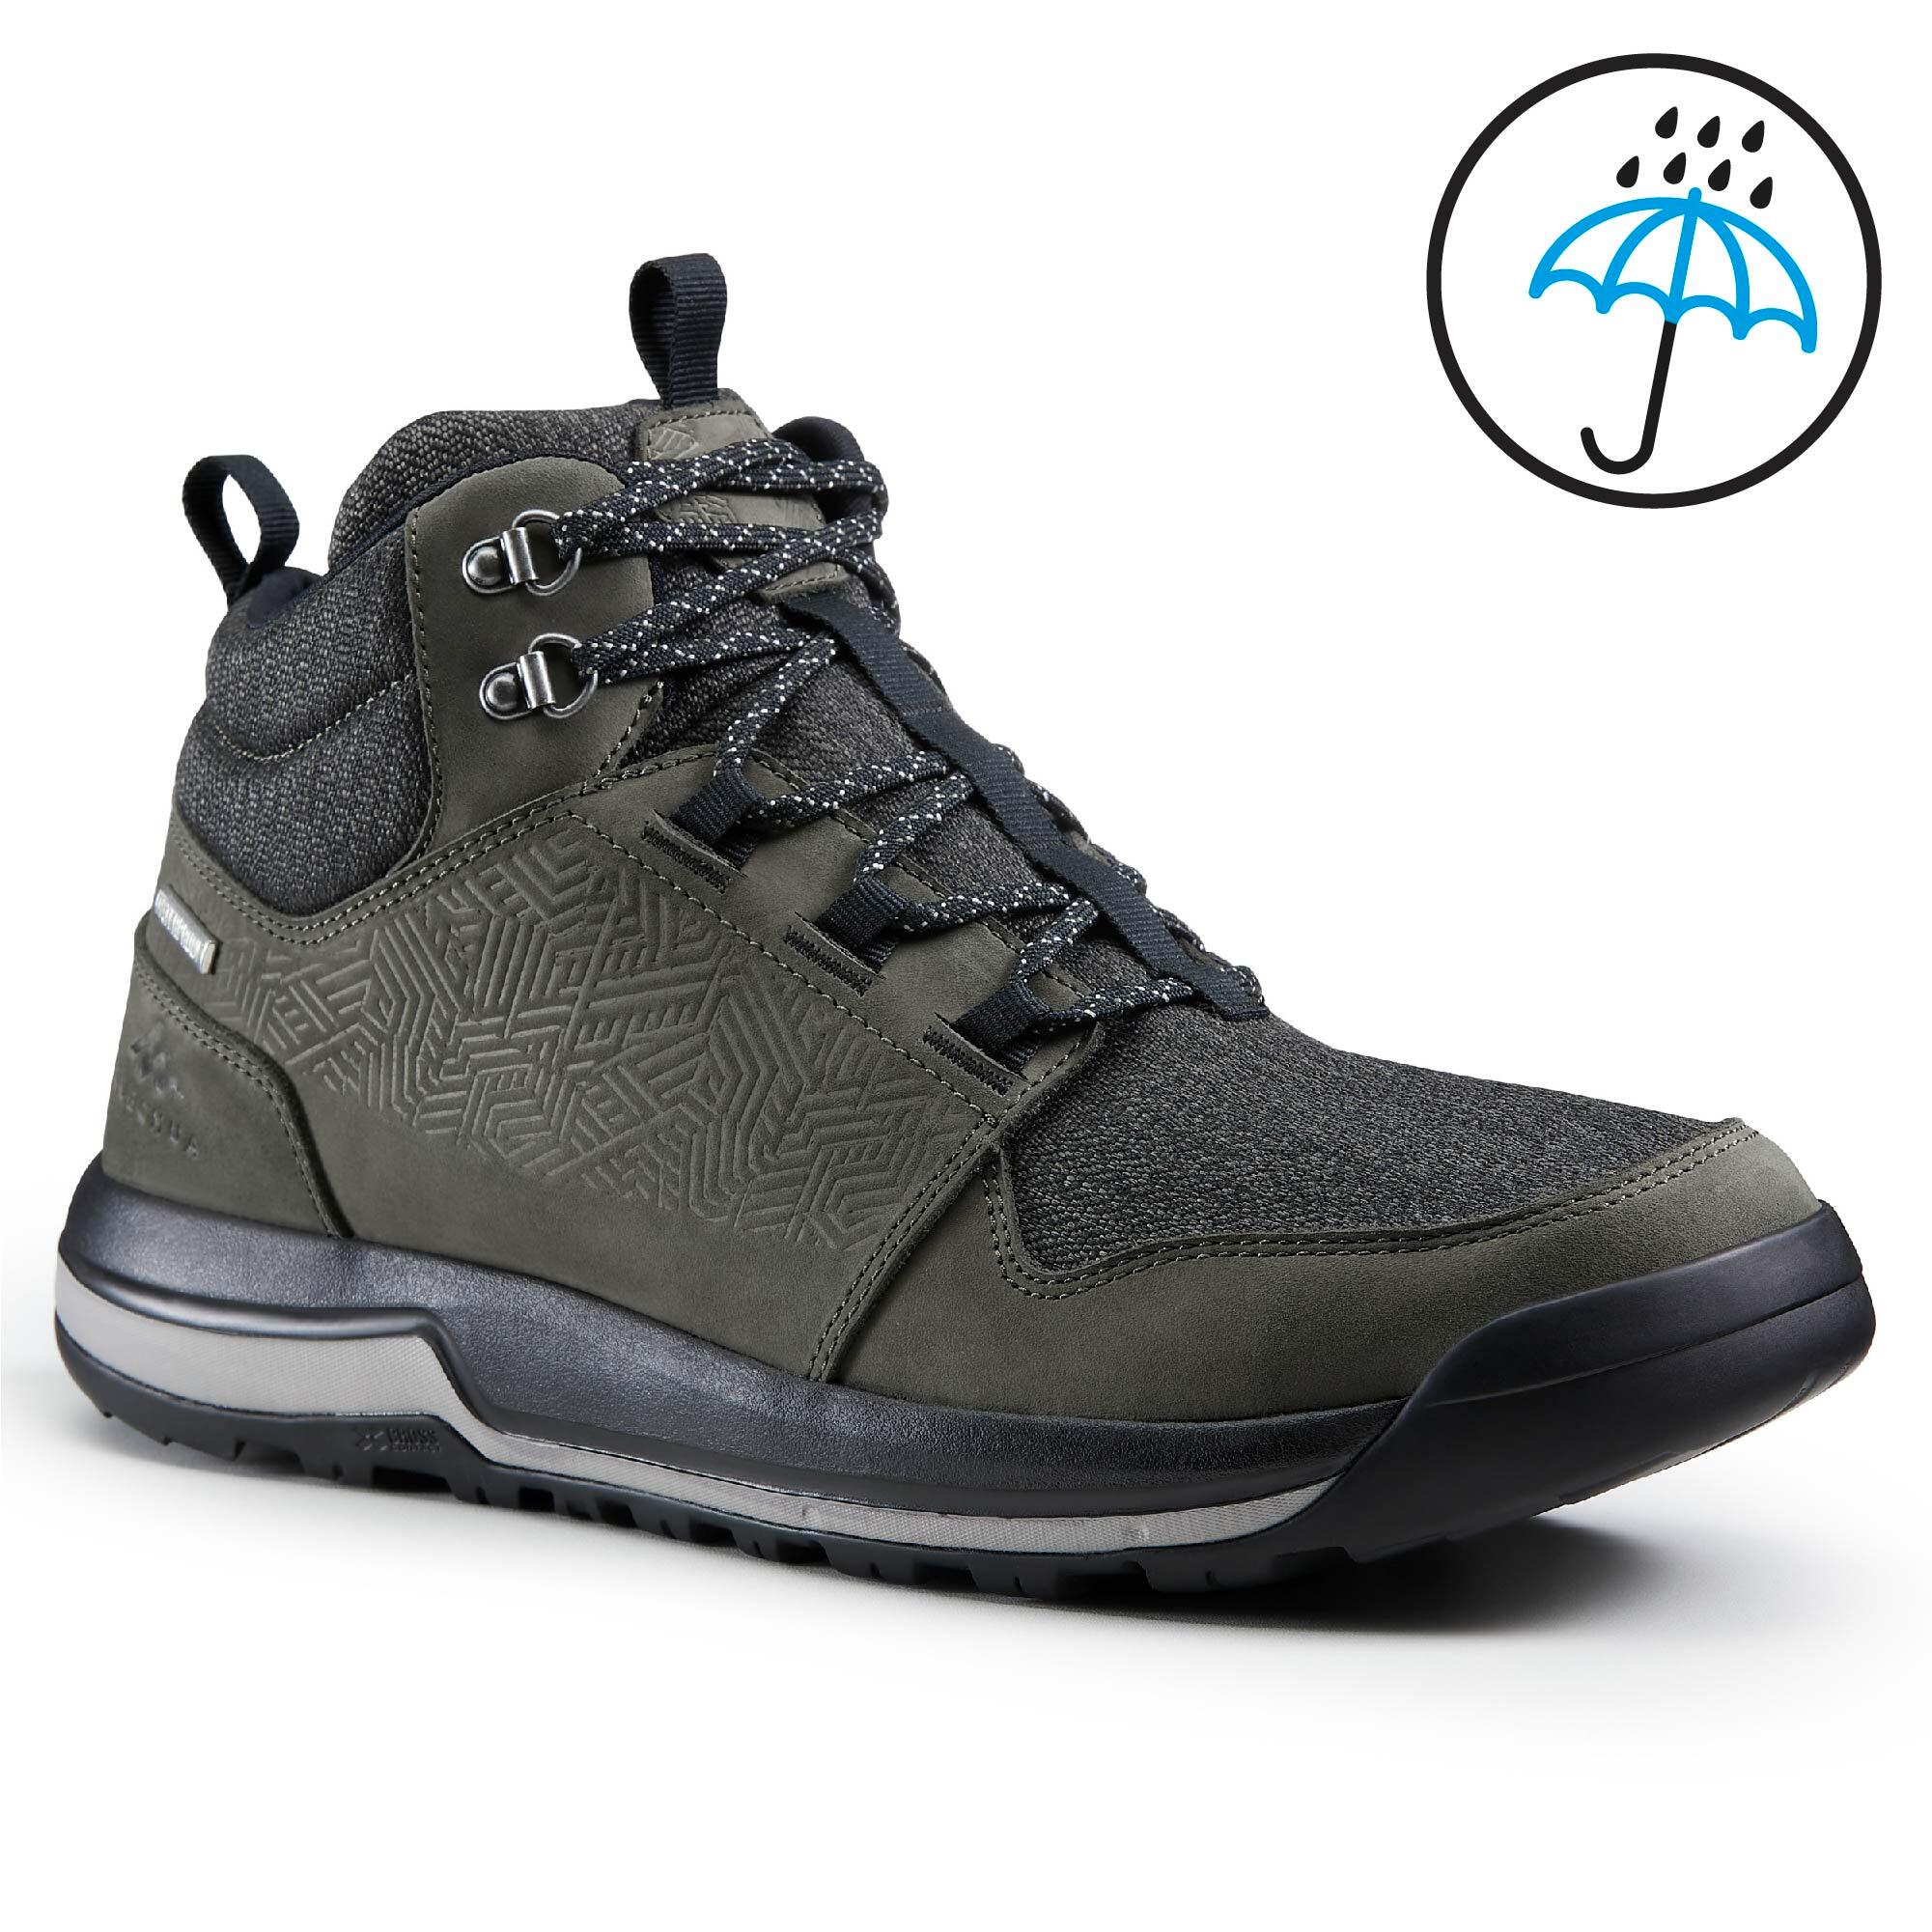 rain proof hiking shoes